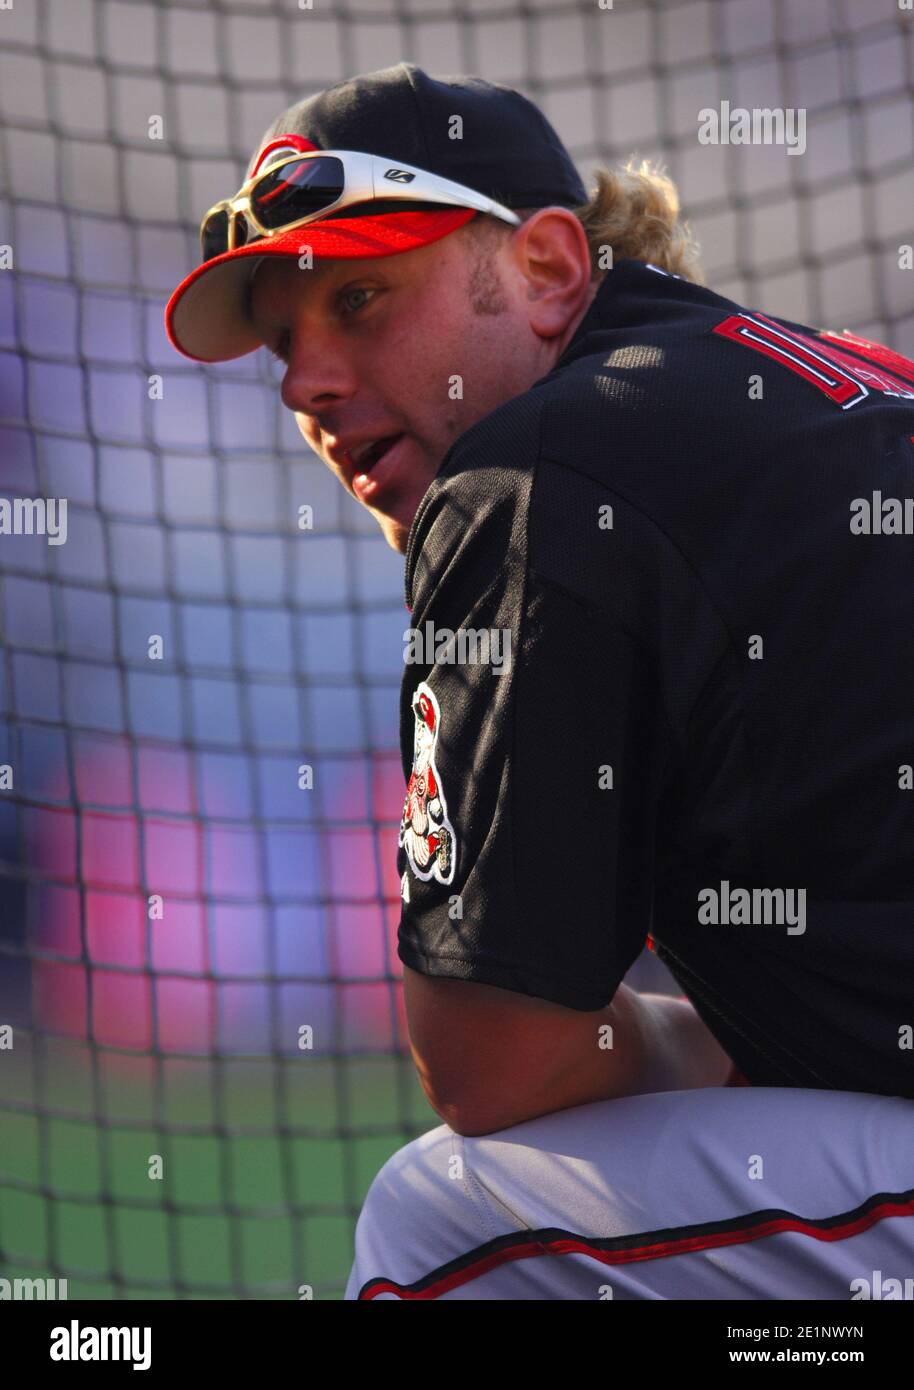 Cincinnati baseball jersey hi-res stock photography and images - Alamy